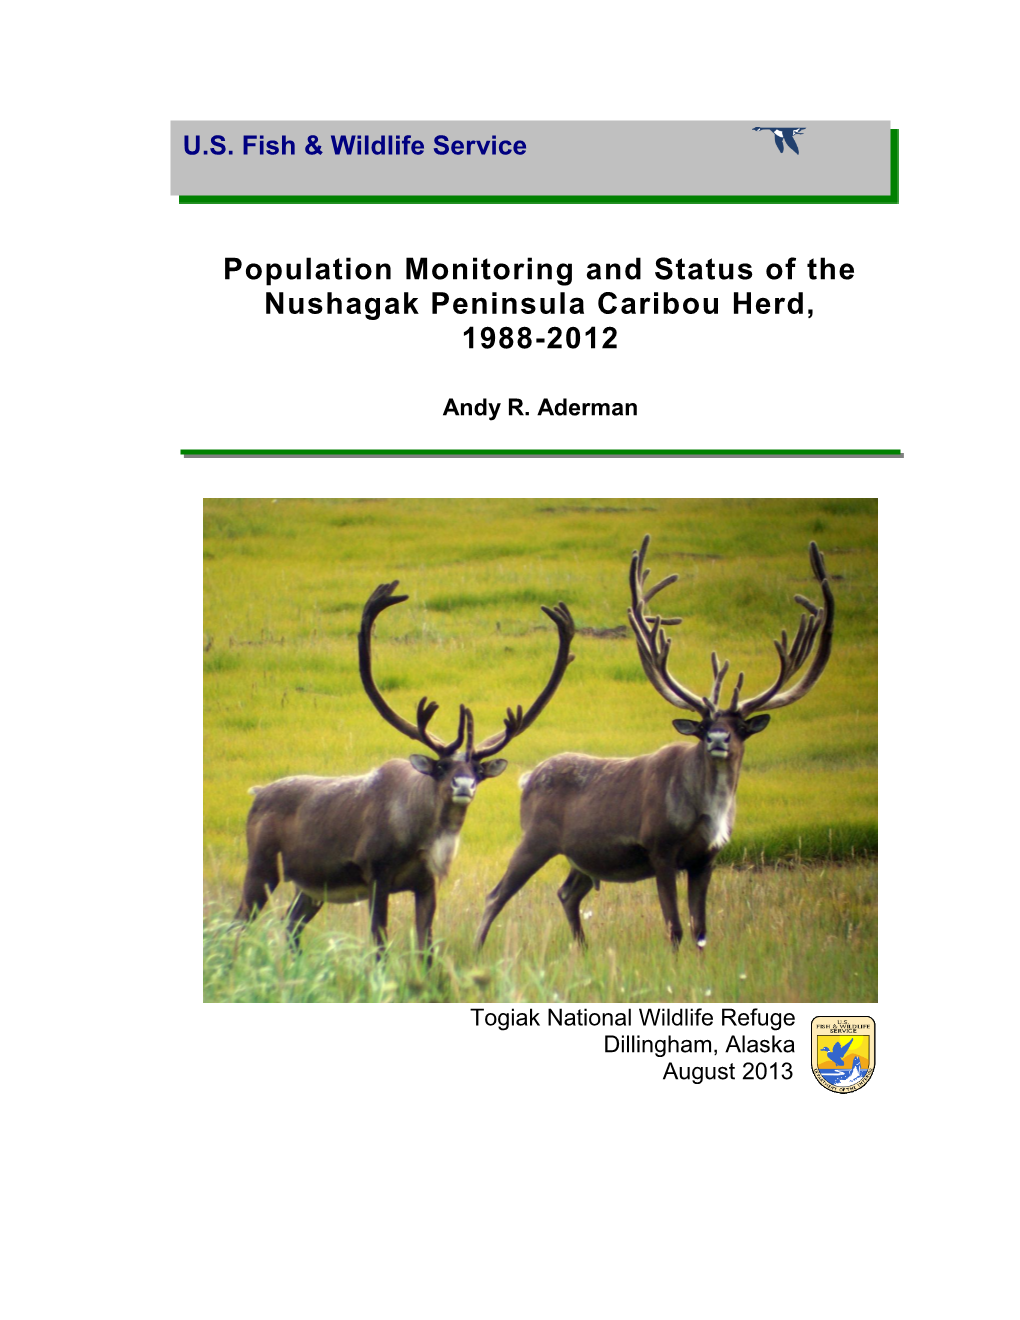 Population Monitoring and Status of the Nushagak Peninsula Caribou Herd